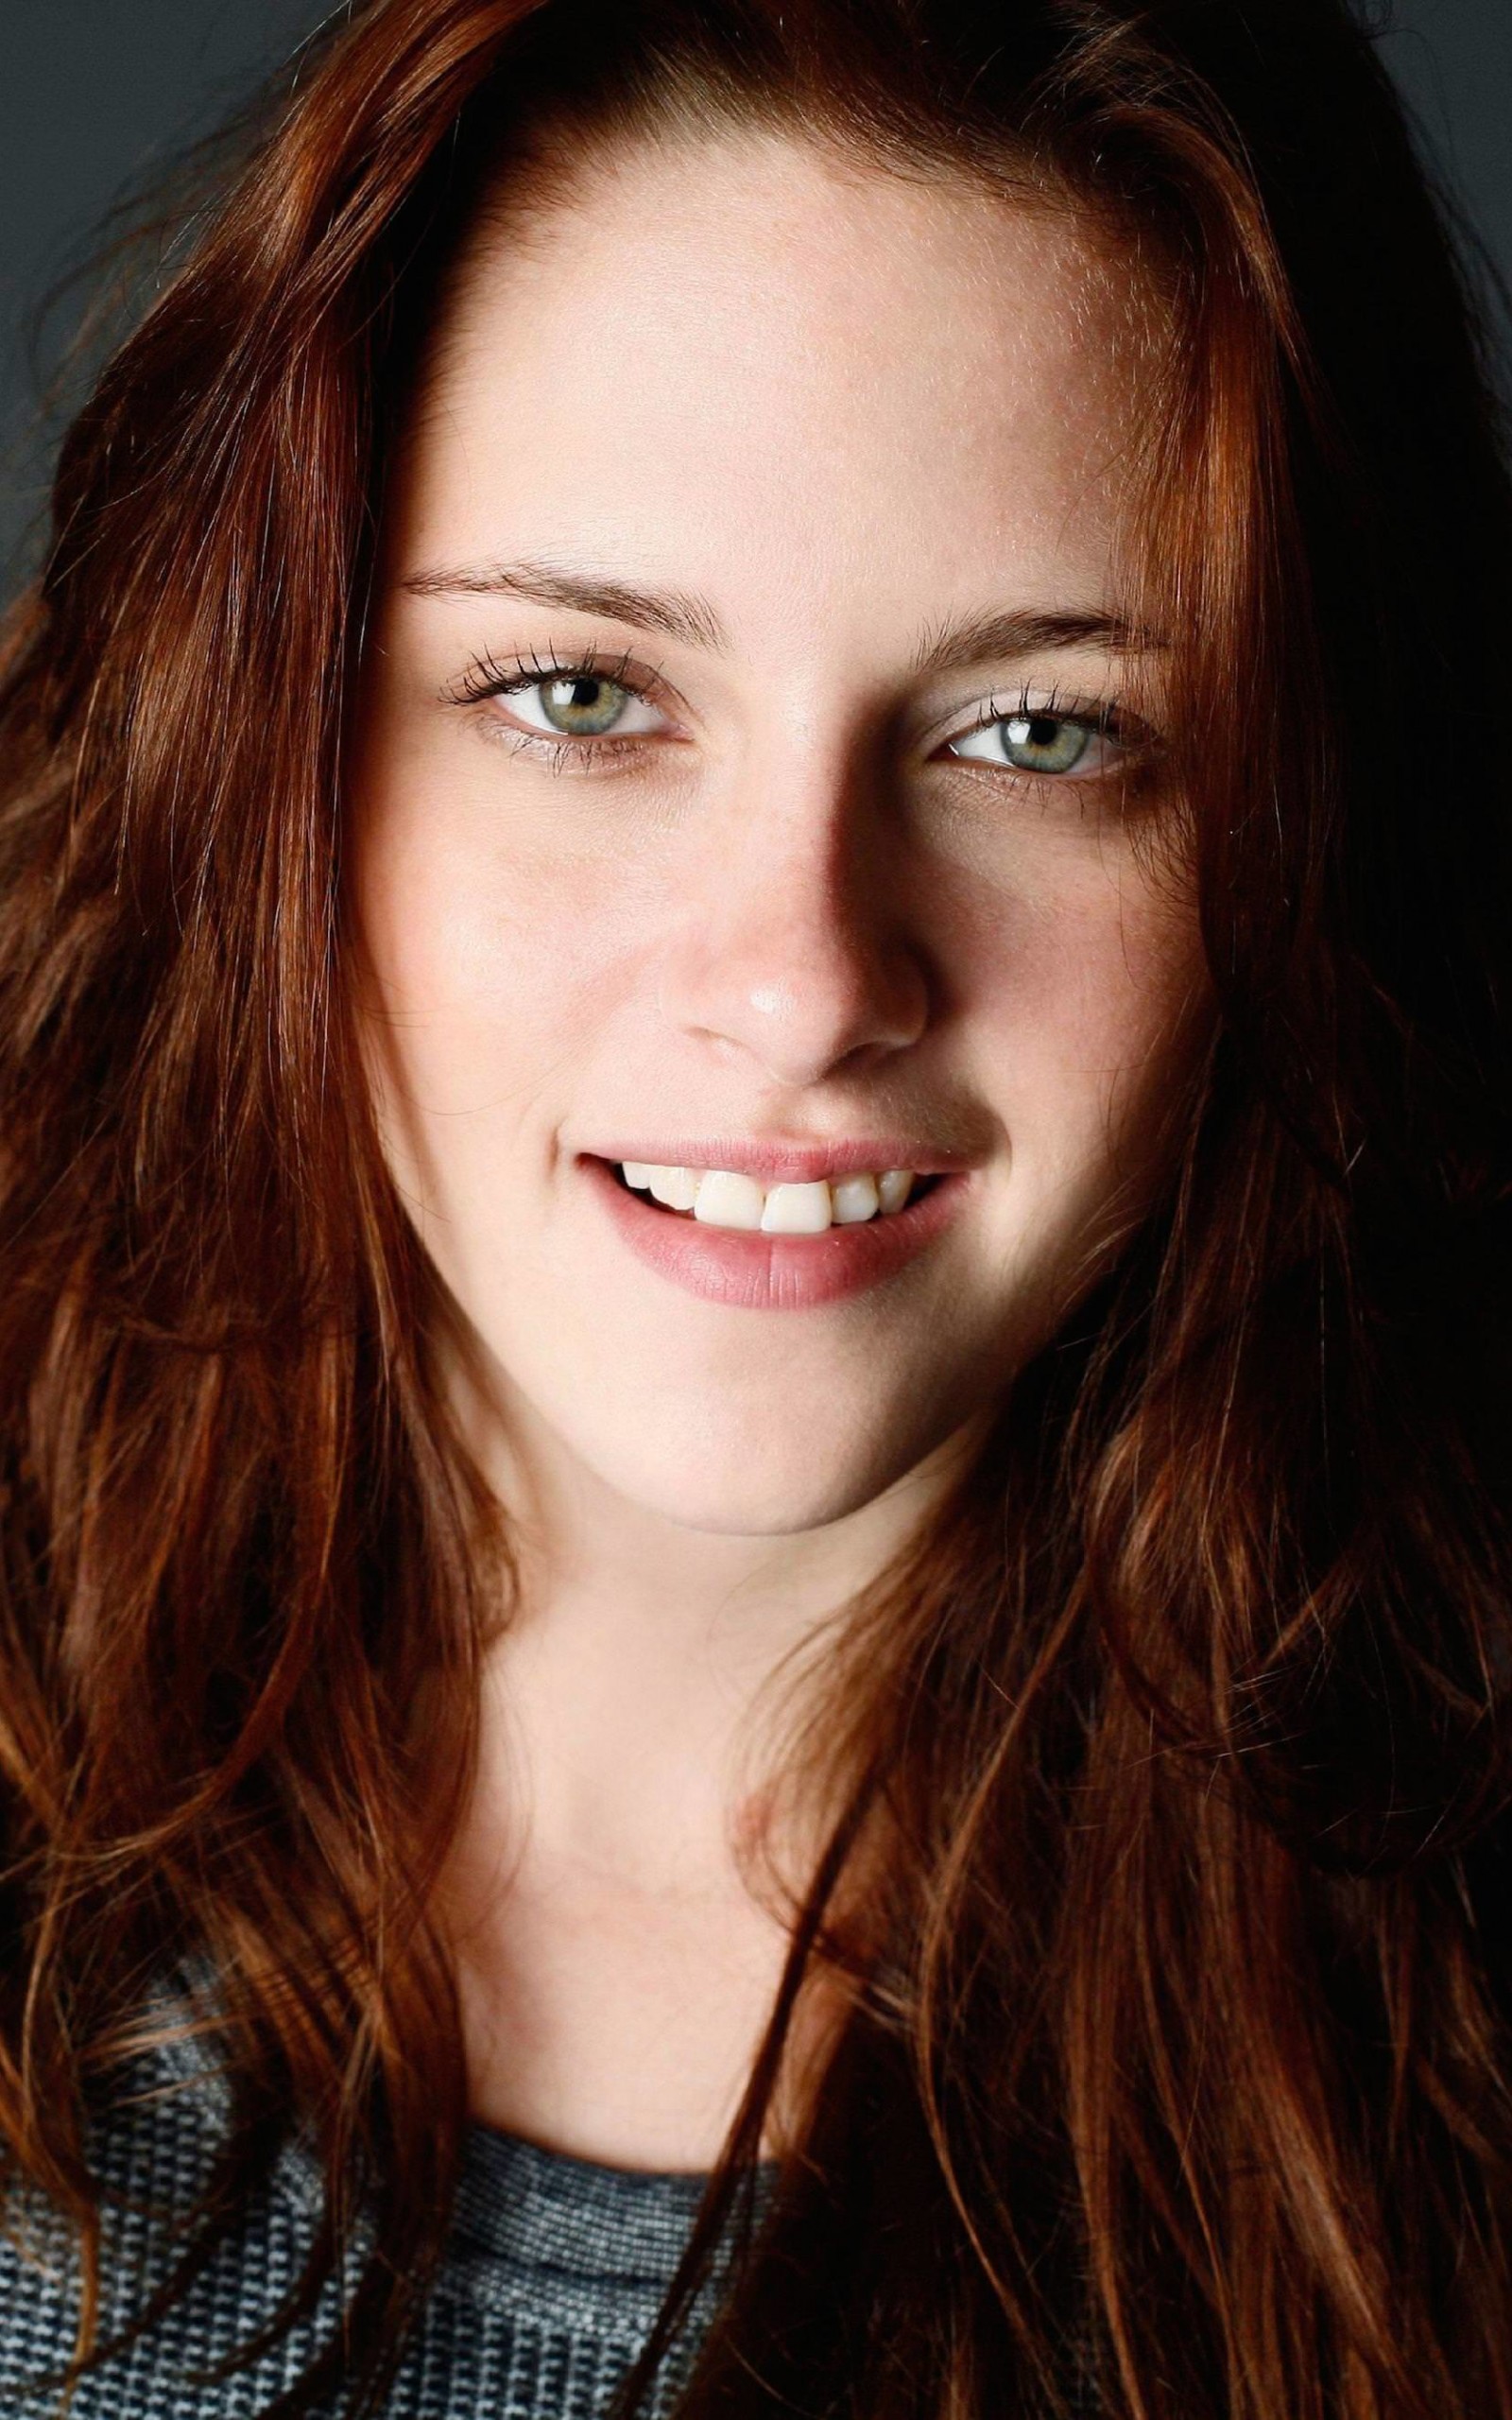 Kristen Stewart Portrait Wallpaper for Amazon Kindle Fire HDX 8.9